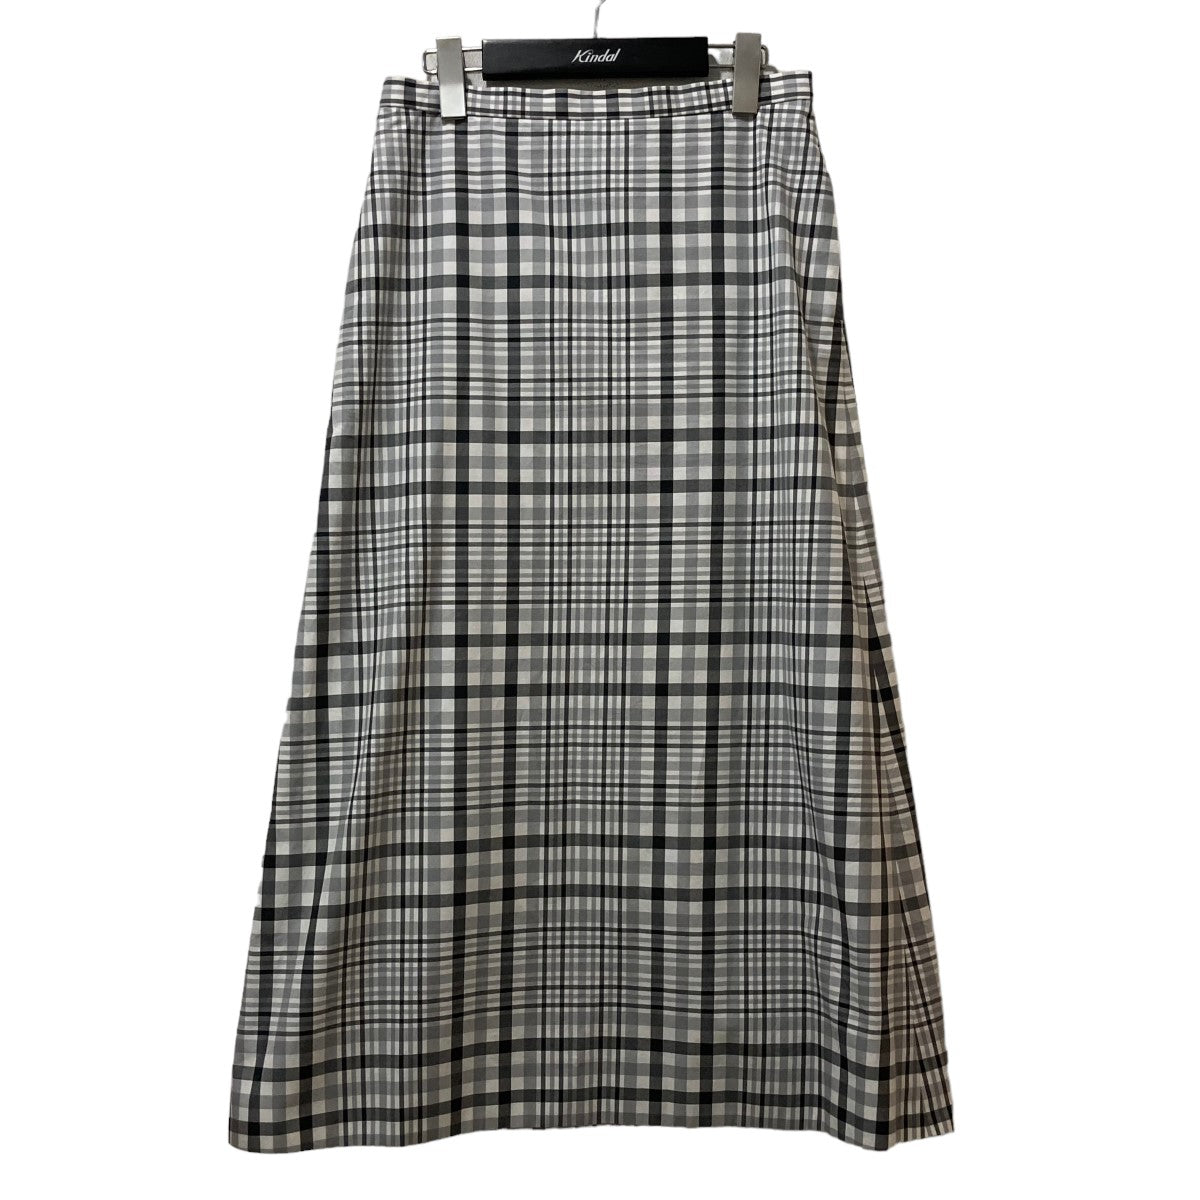 DRAWER(ドゥロワー) A-line skirt チェックAラインスカート 6524-299 